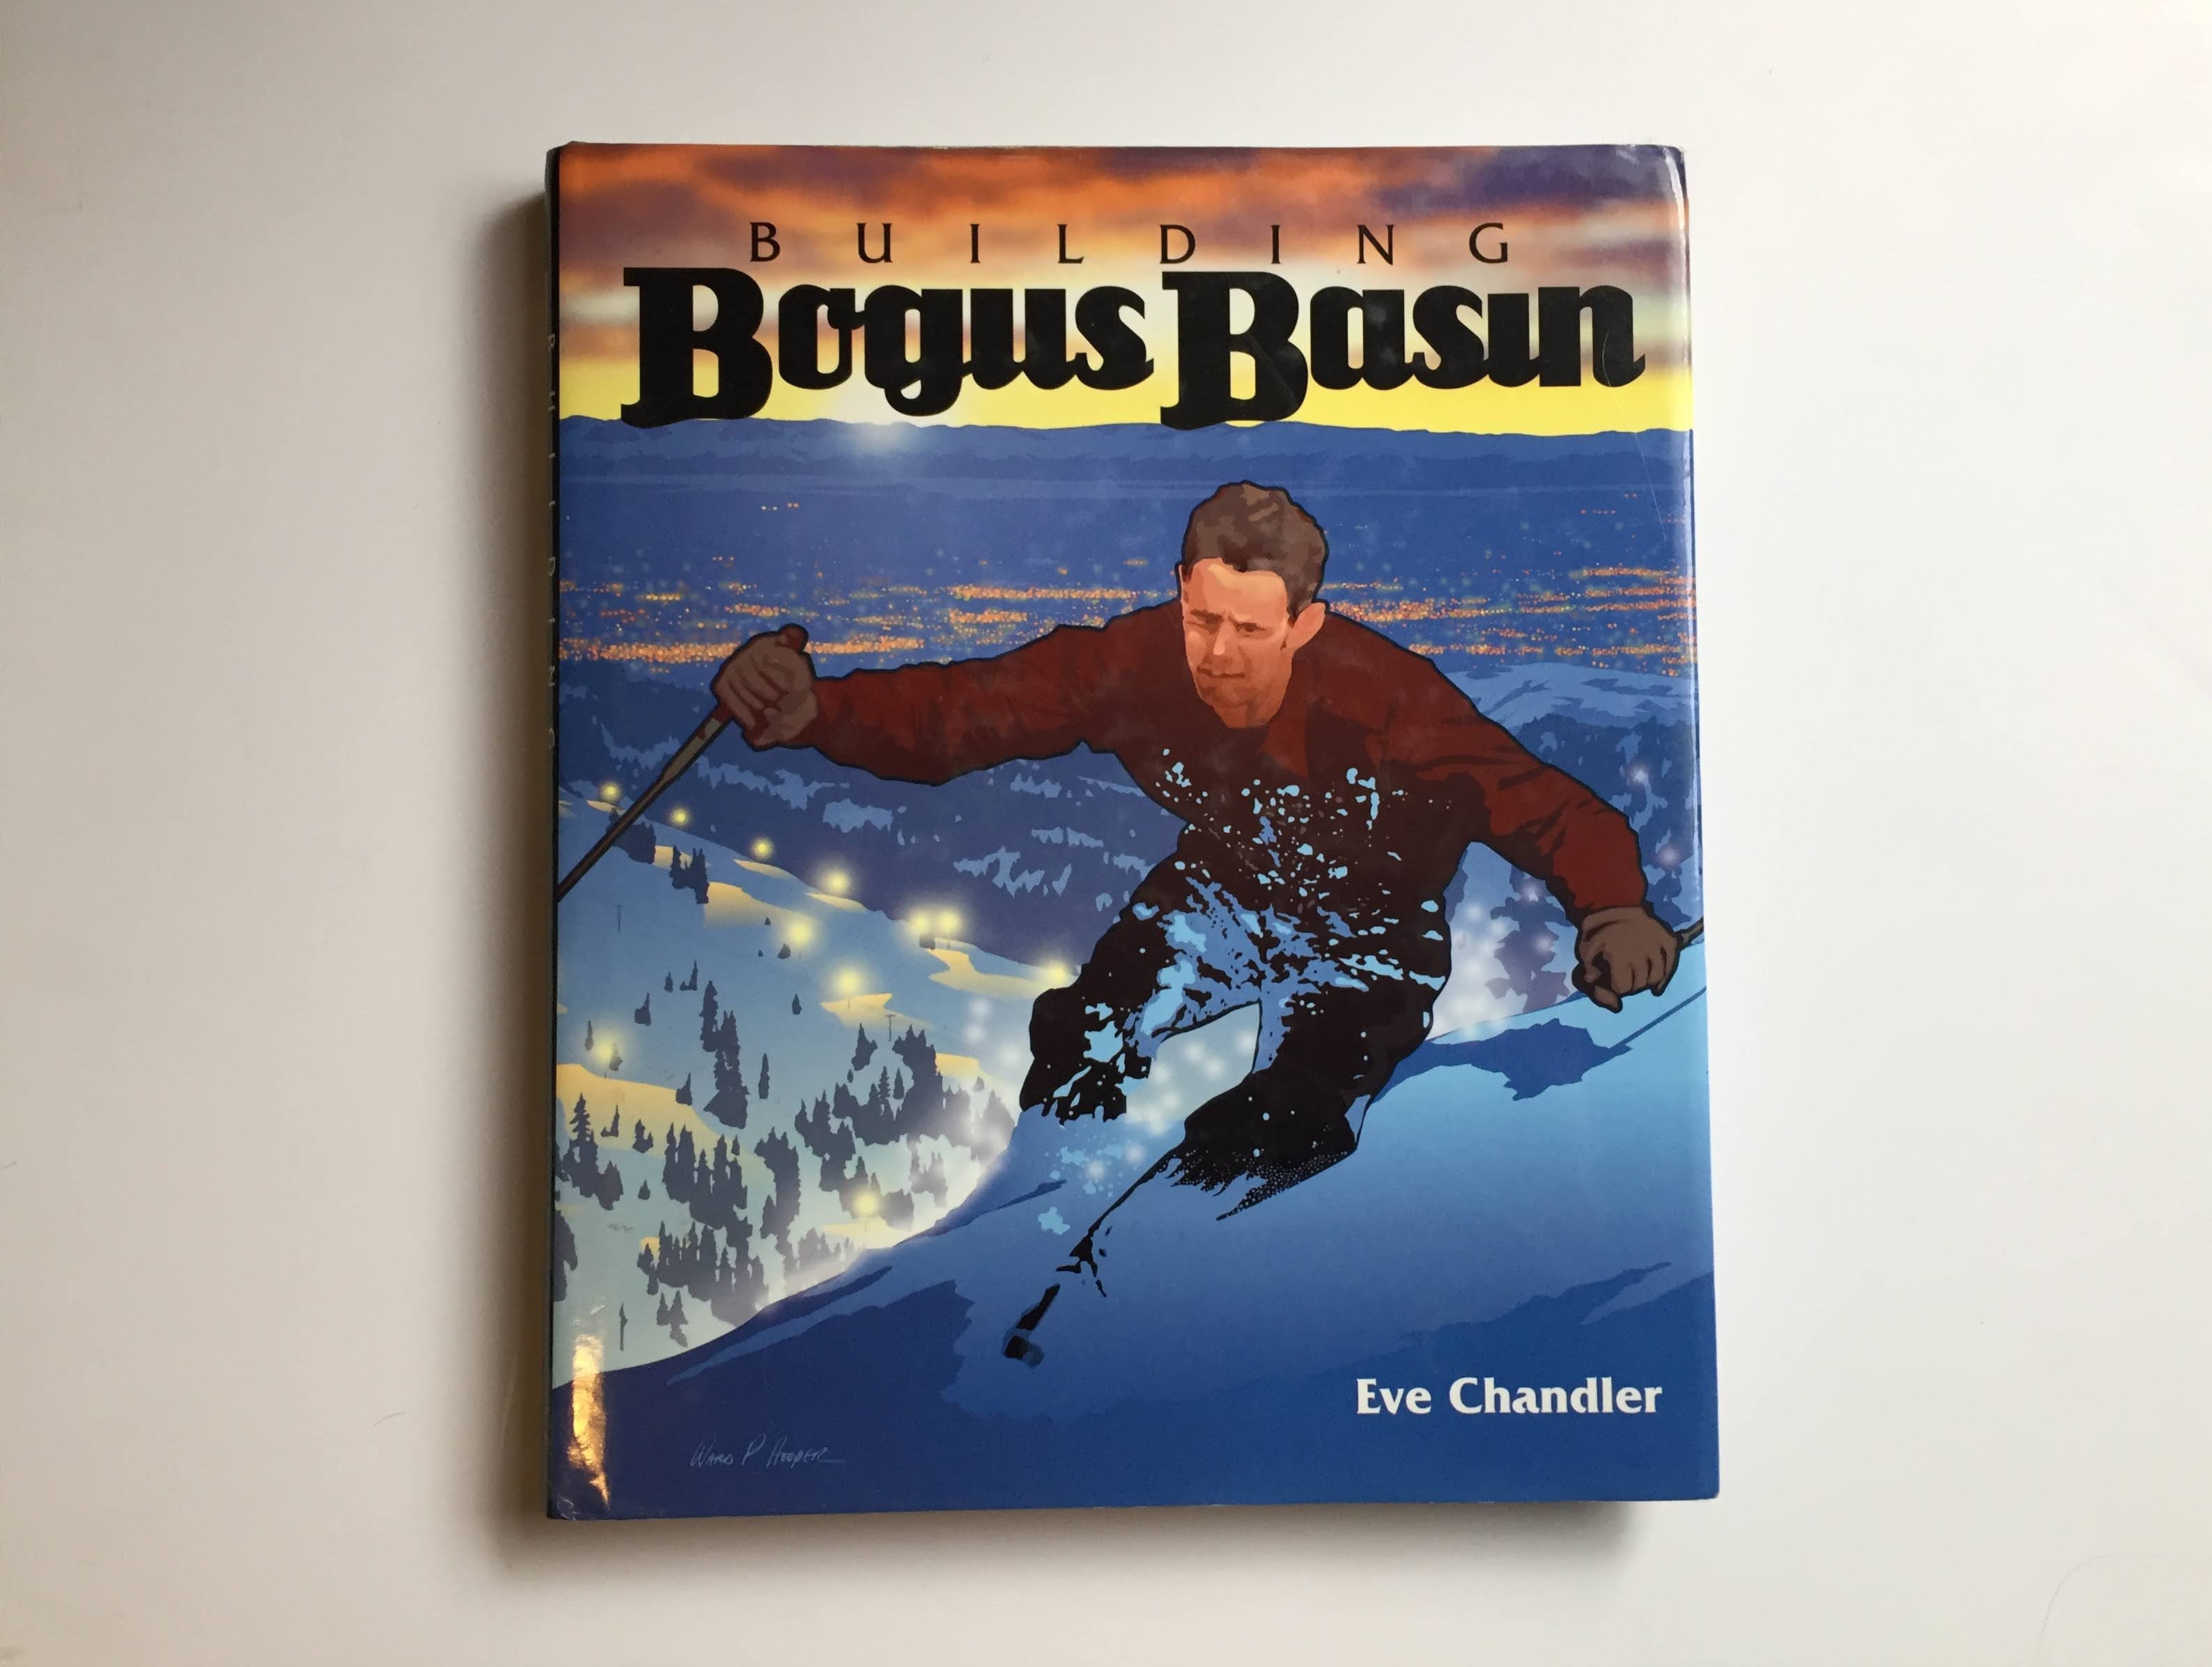 bogus basin coffee table book